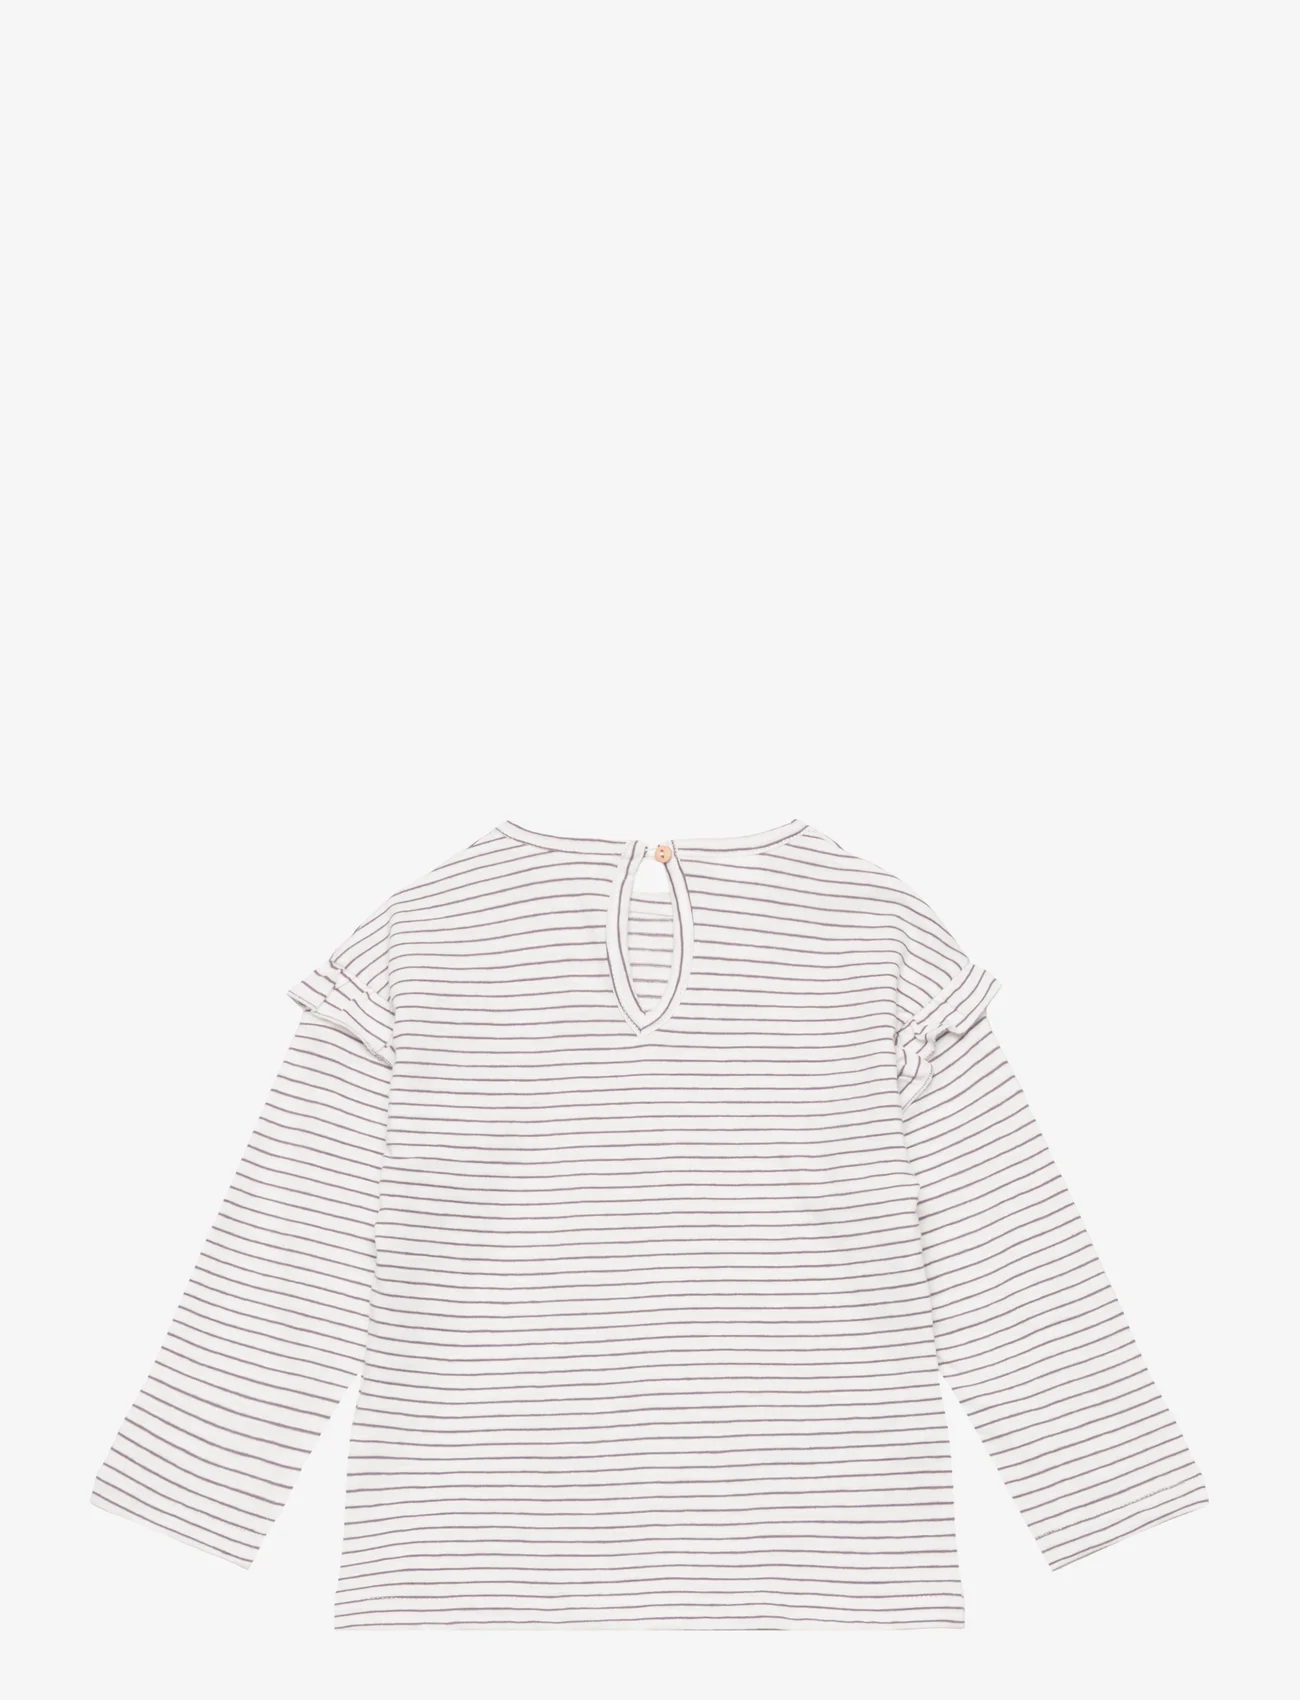 Mango - Striped long sleeves t-shirt - langærmede t-shirts - charcoal - 1